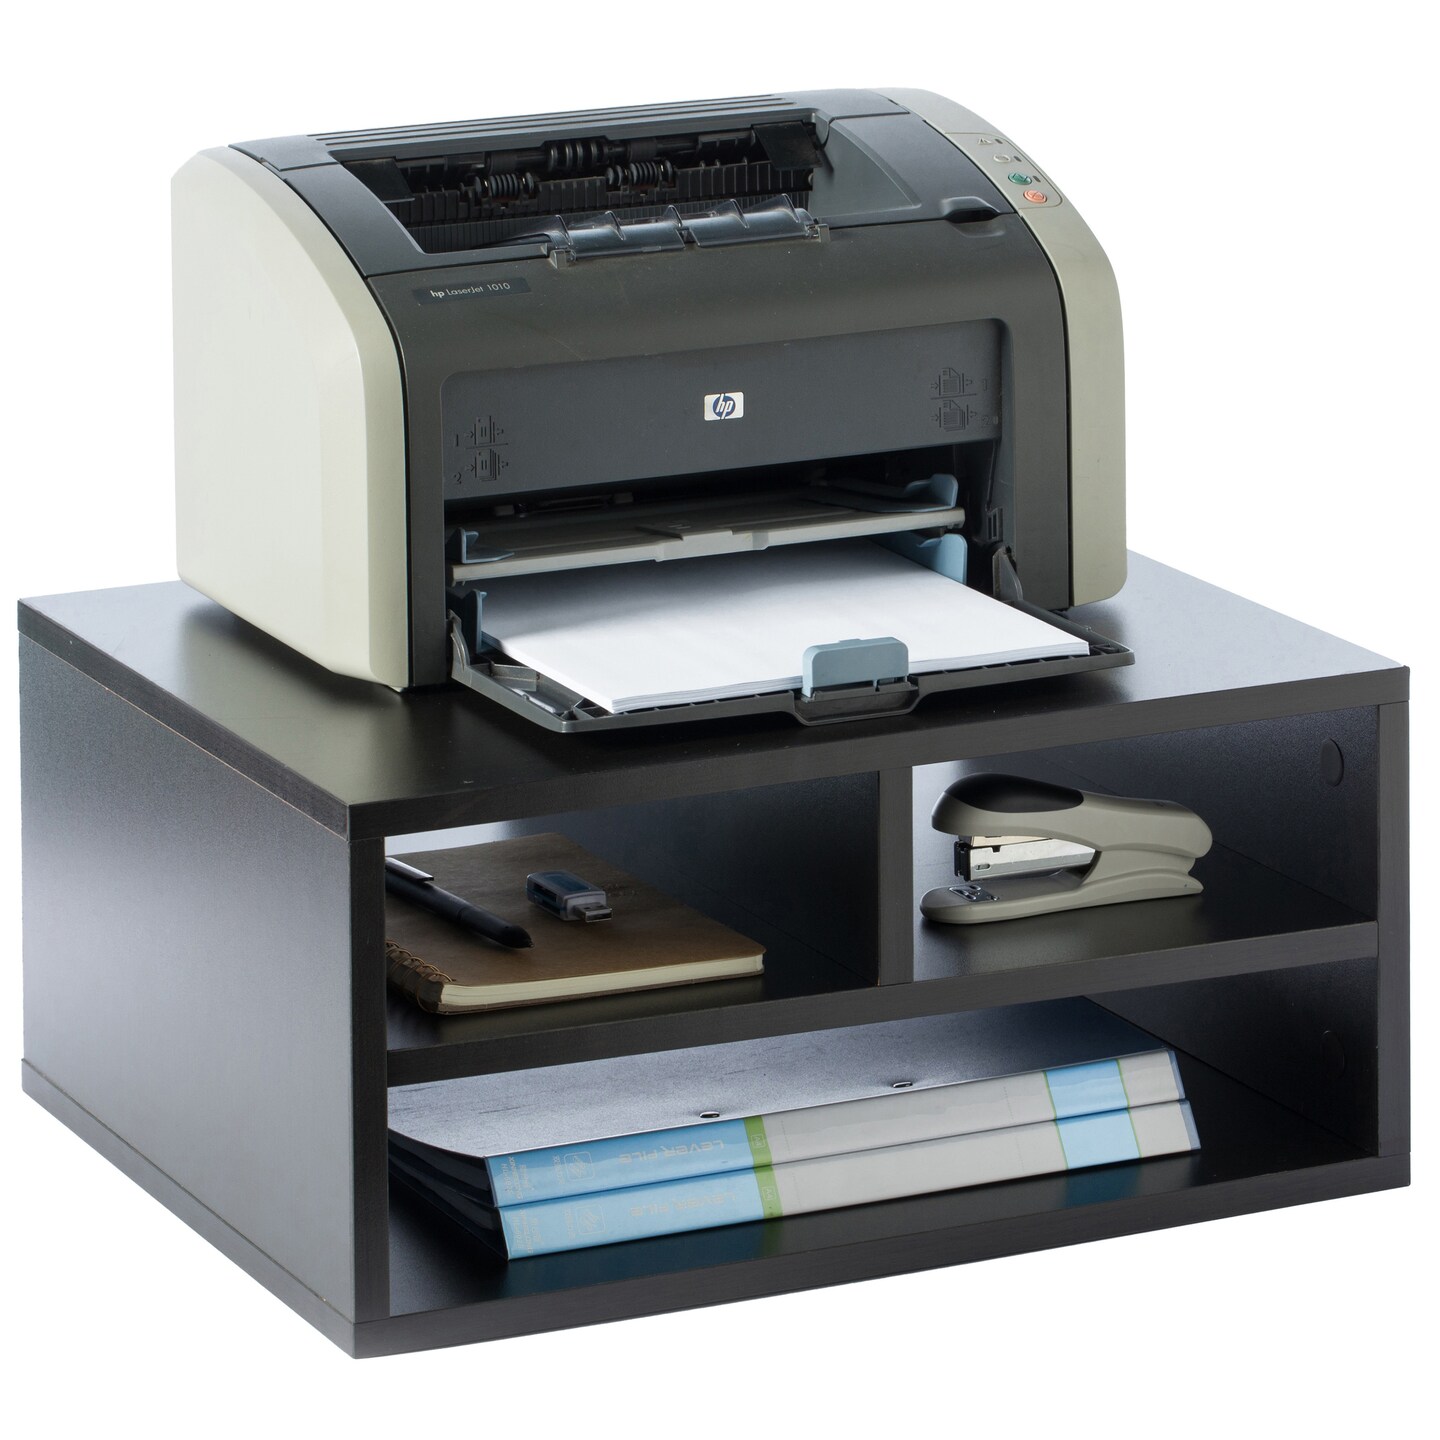 Basicwise Printer Stand Shelf Wood Office Desktop Compartment Organizer